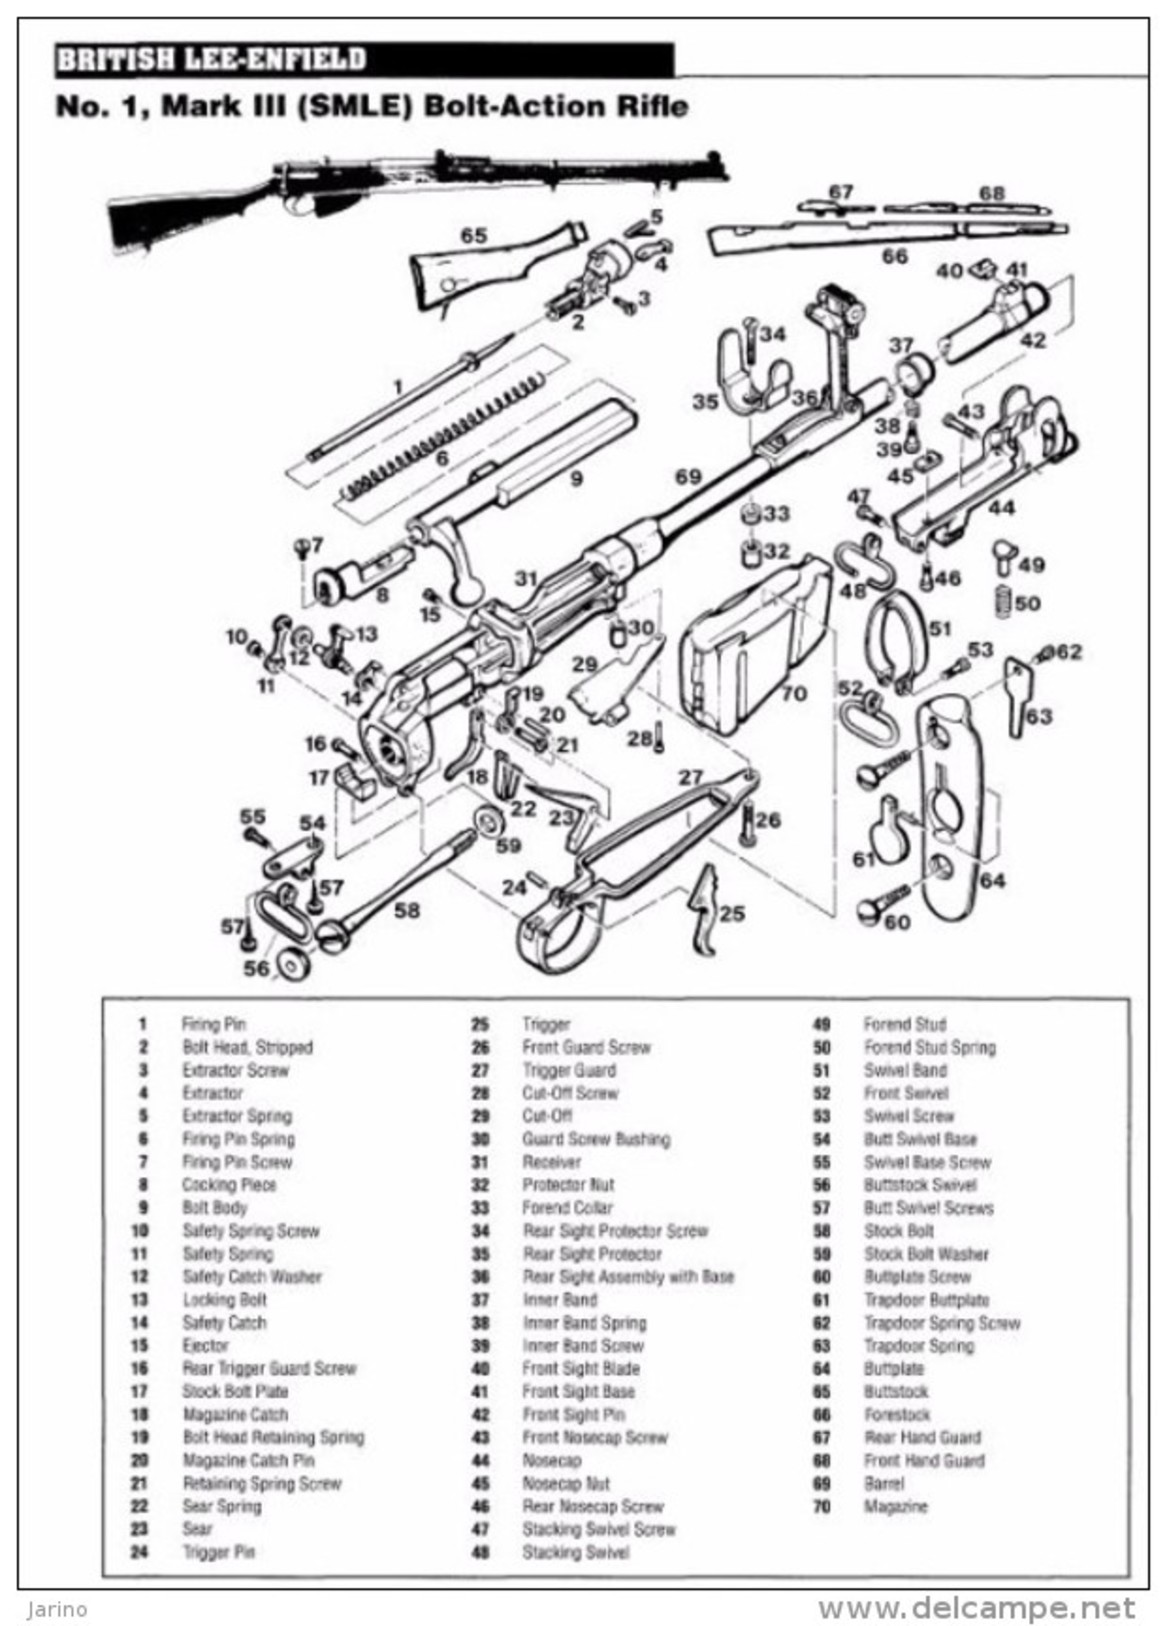 Exploded Gun Drawings,1034 pages sur DVD,975 Isometric Views Handguns Shotguns Rifles Manufacturer's Directory + more